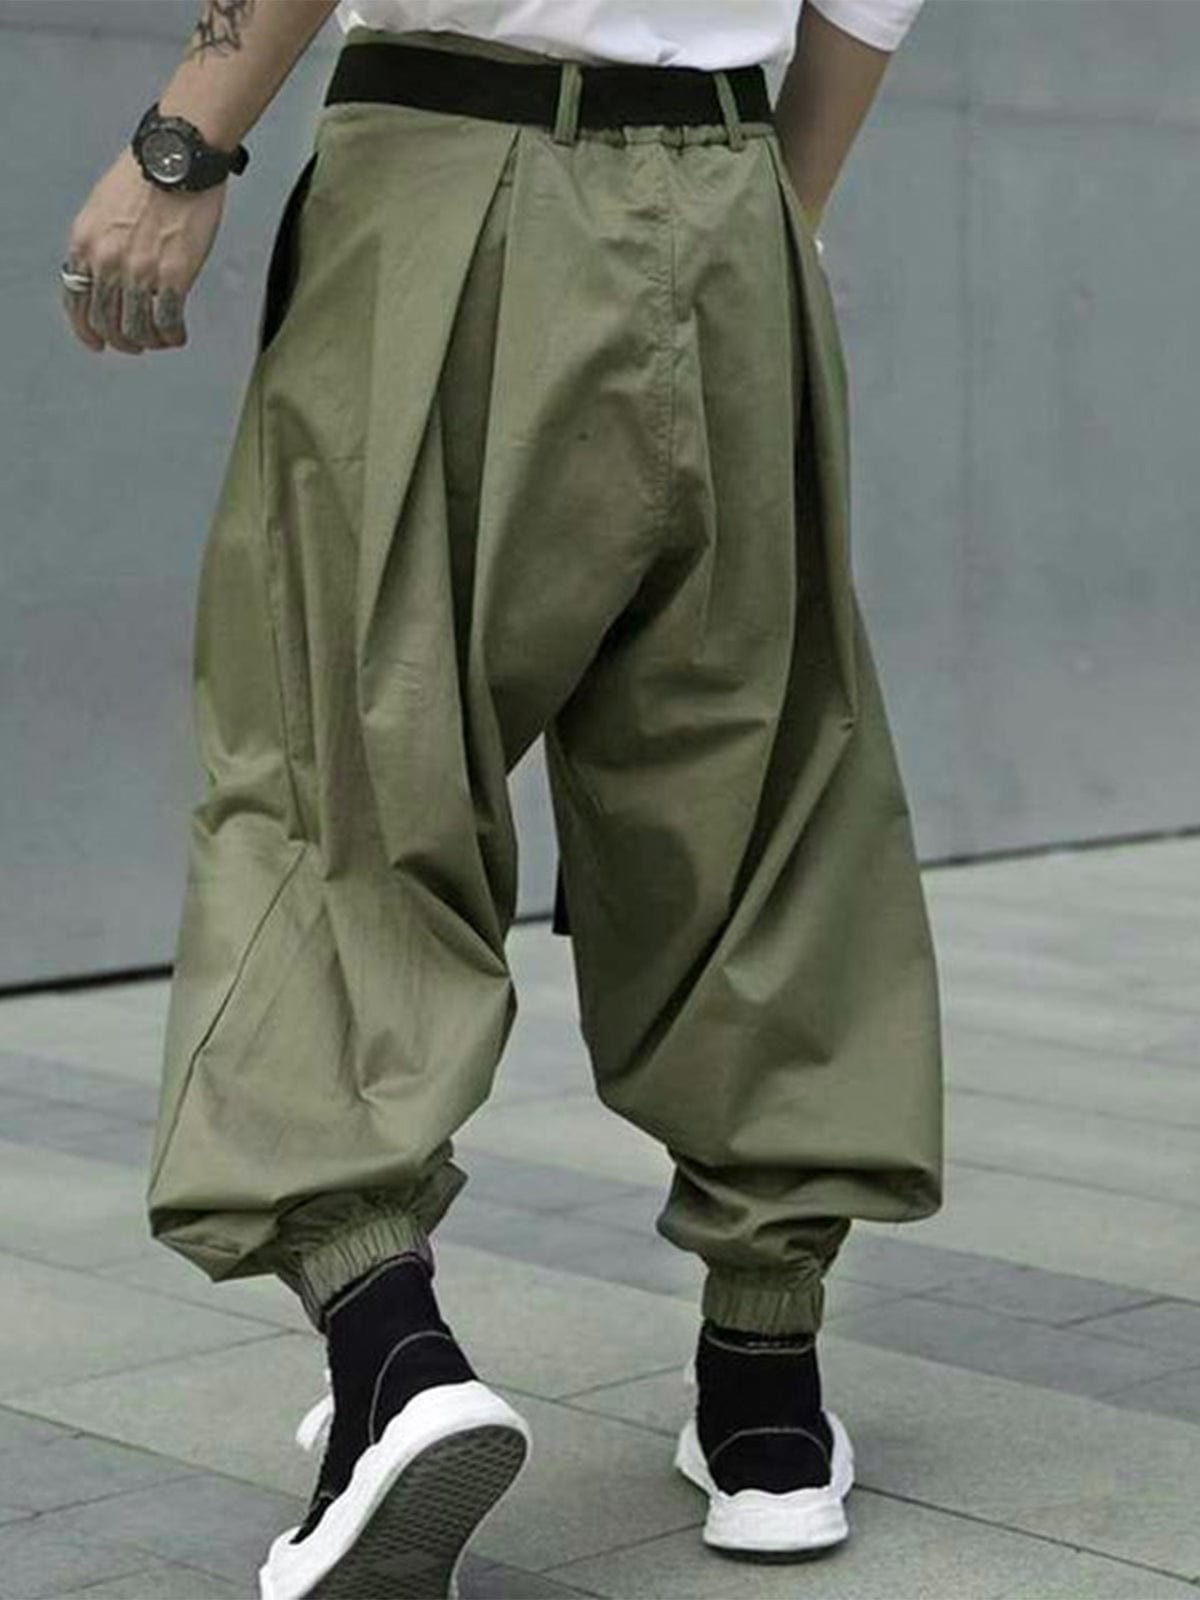 Dark Personality Collapse Pants Streetwear Brand Techwear Combat Tactical YUGEN THEORY